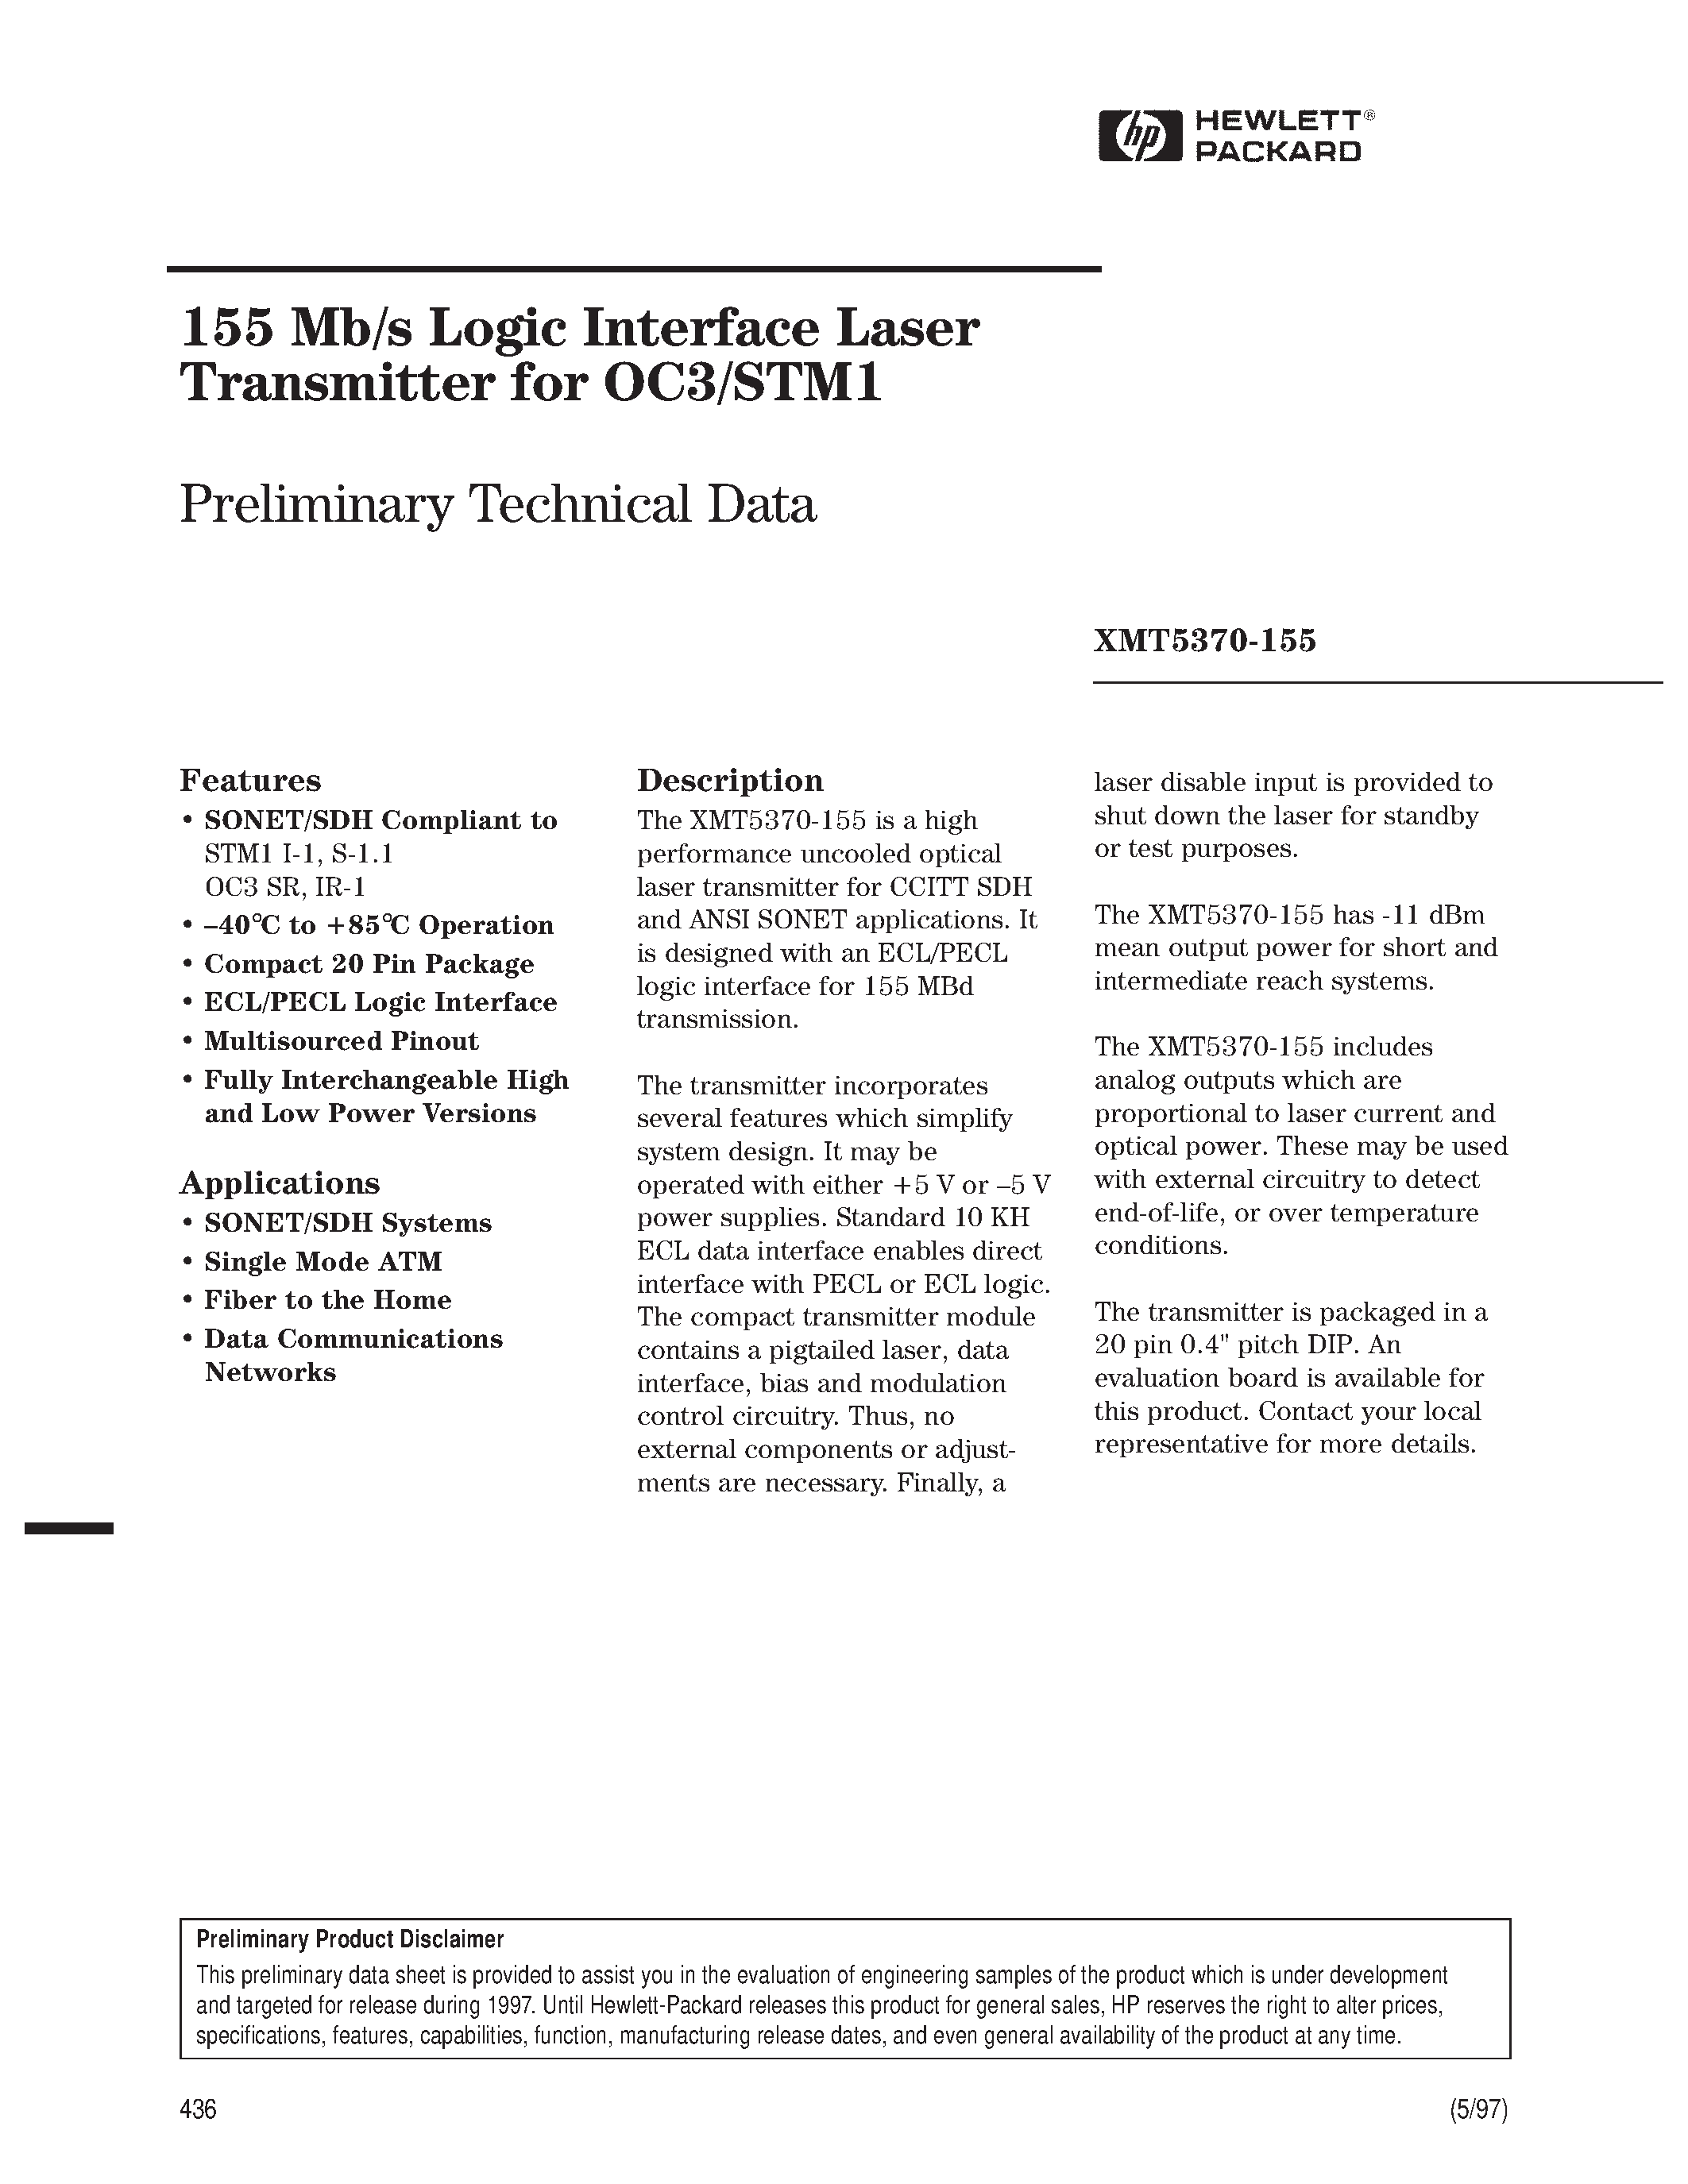 Datasheet XMT5370-155 - 155 Mb/s Logic Interface Laser Transmitter for OC3/STM1 page 1